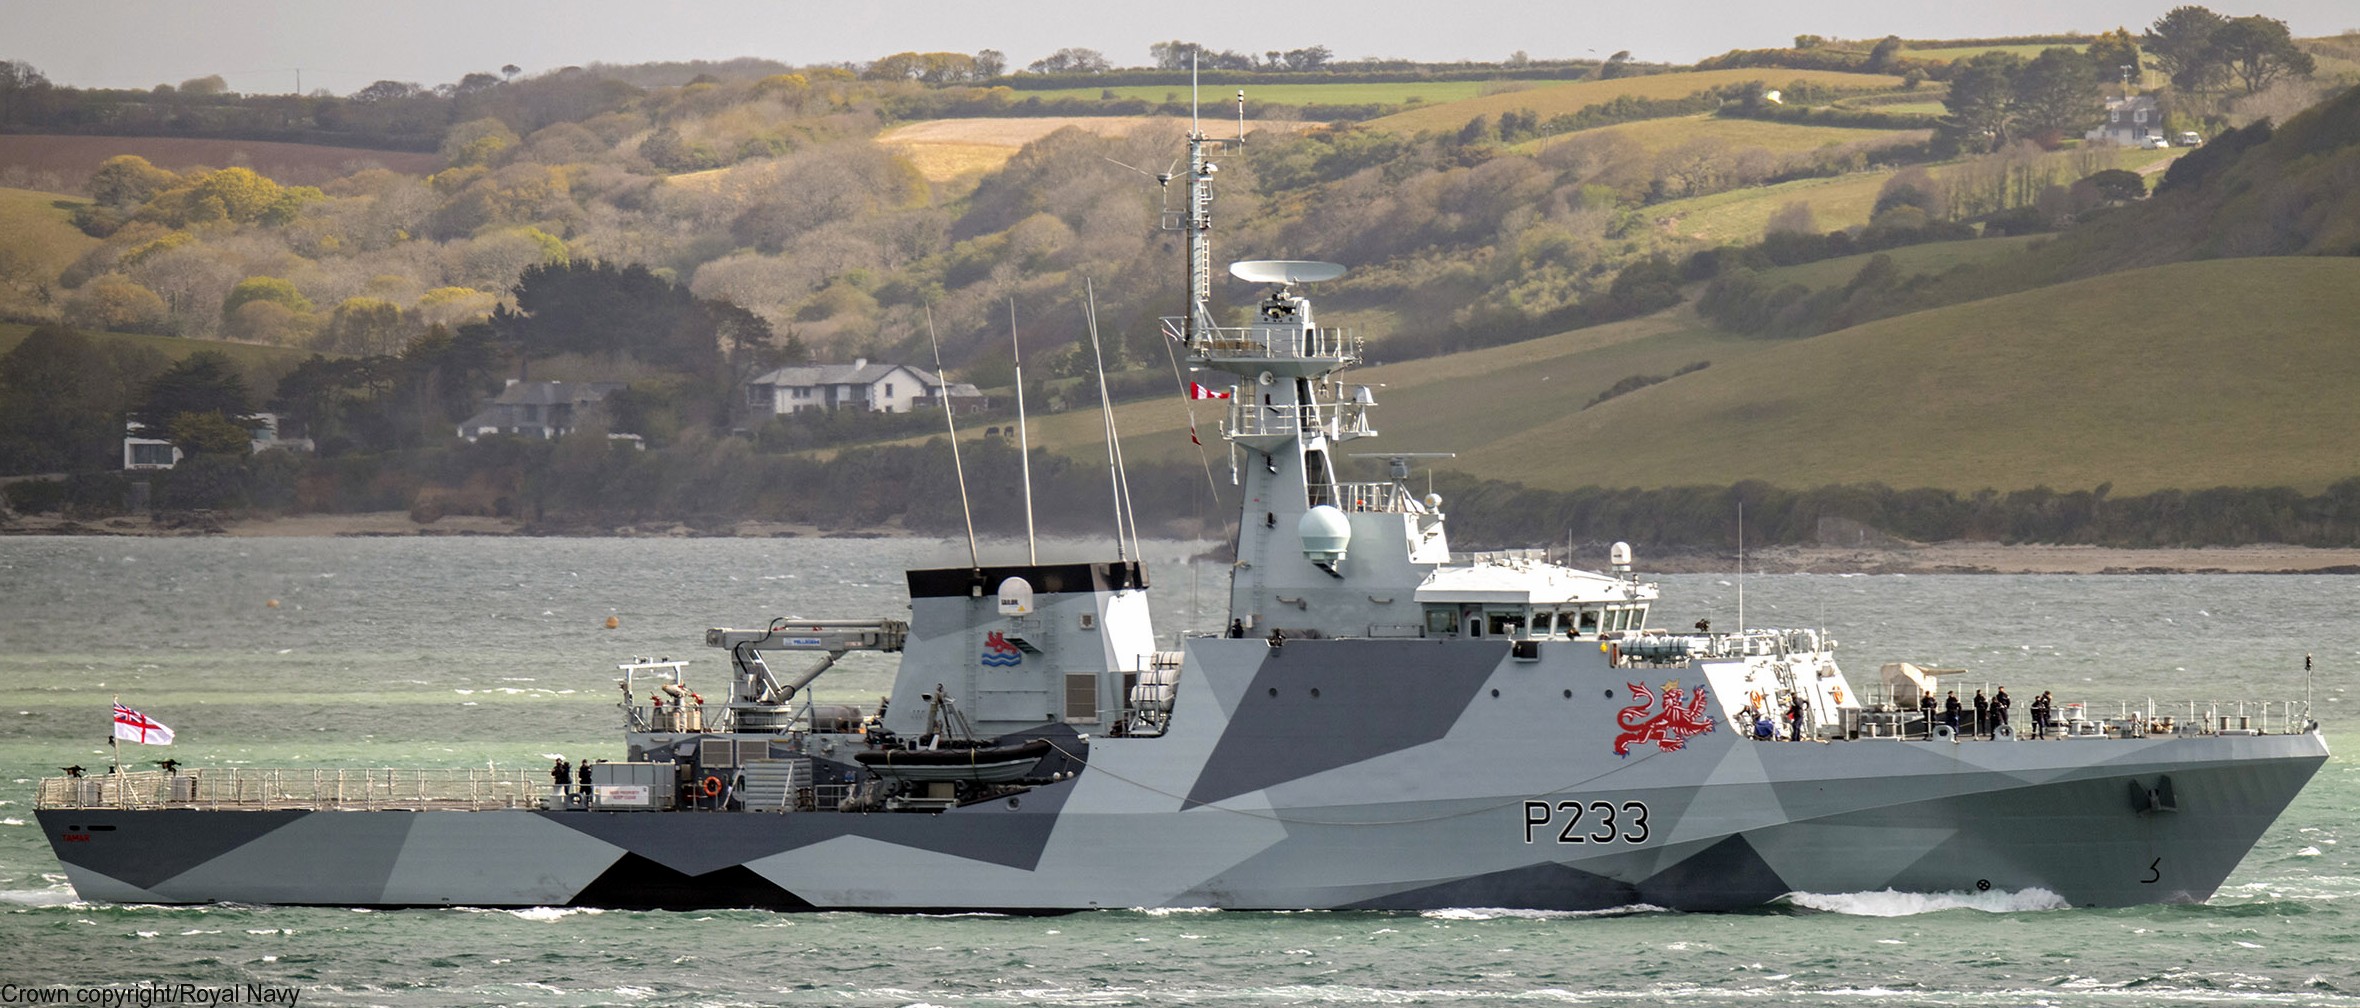 p233 hms tamar river class offshore patrol vessel opv royal navy 17